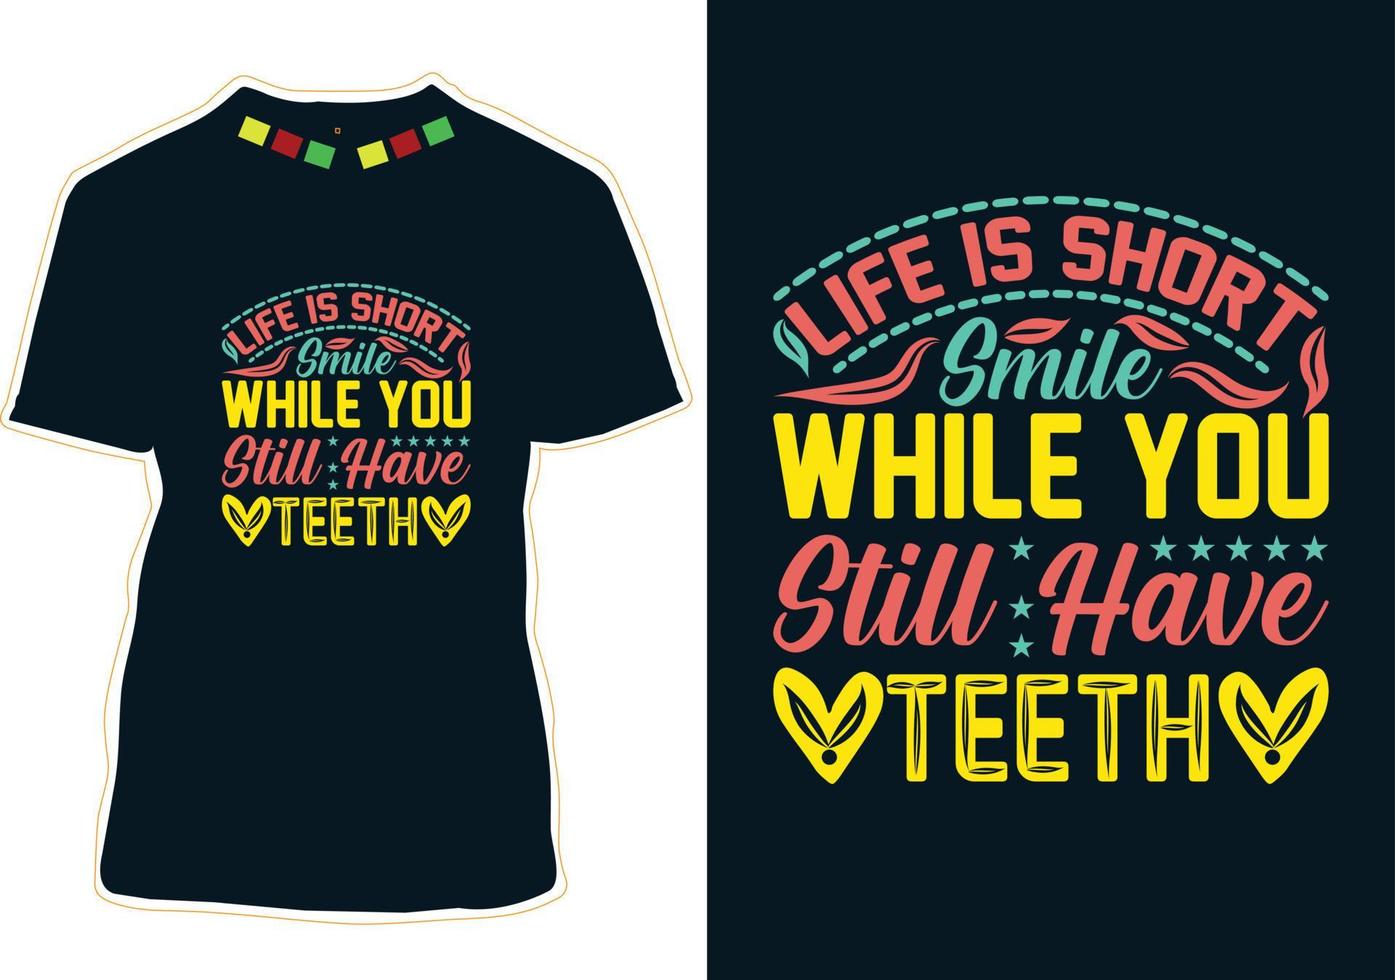 design de camiseta do dia mundial do sorriso vetor